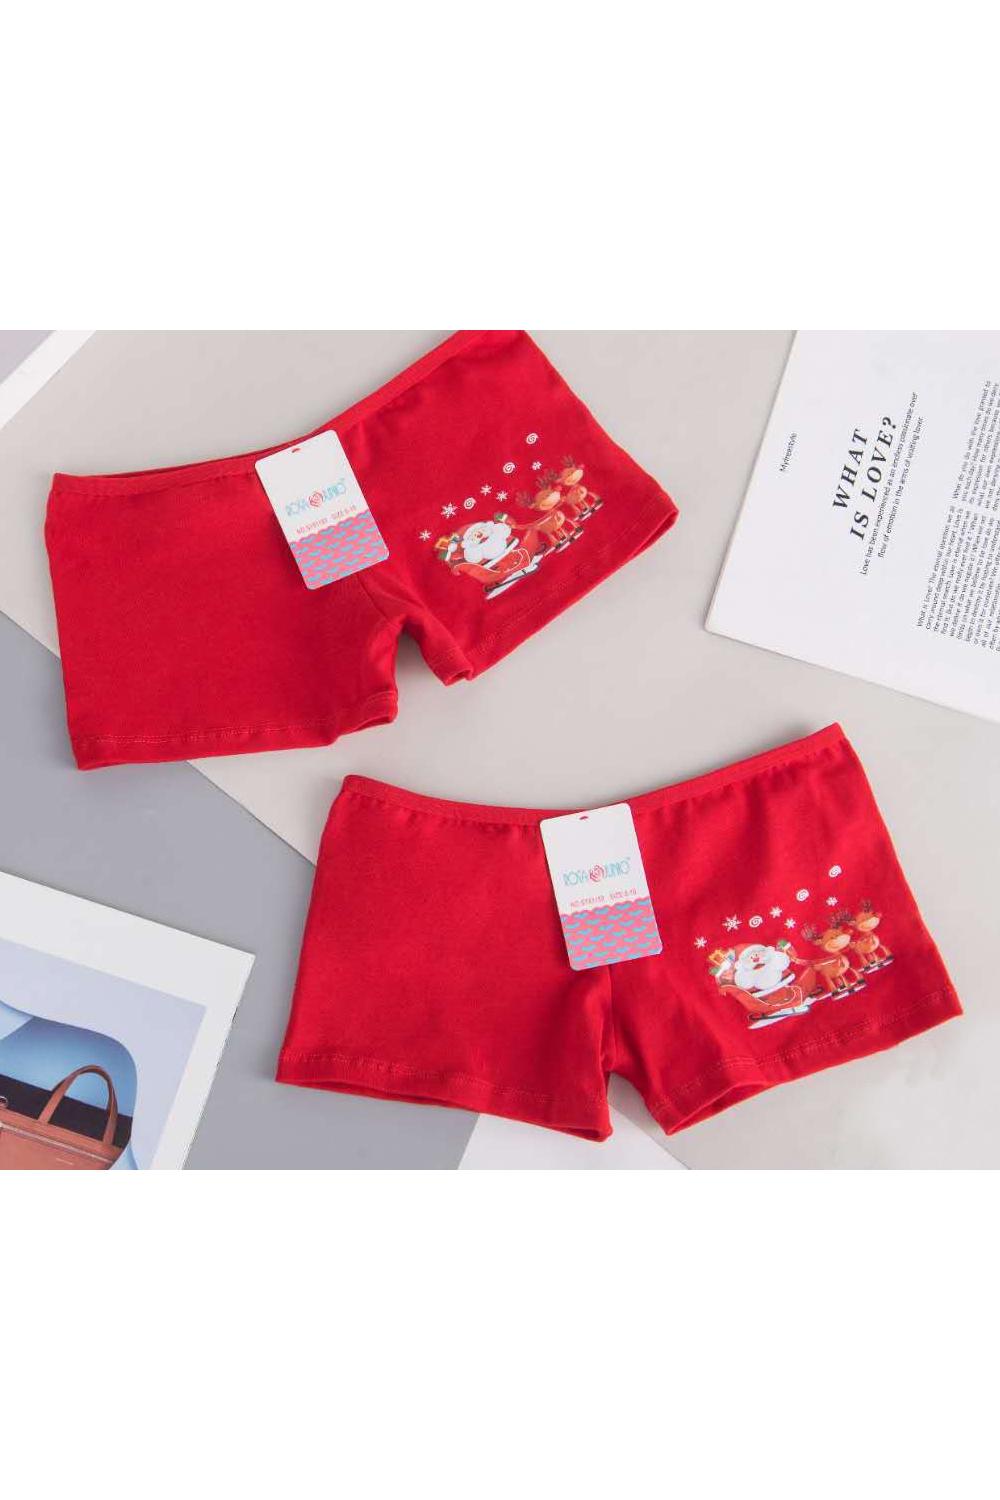 Underwear Kid & Babies Red FENG YUN 81189 #c Efashion Paris